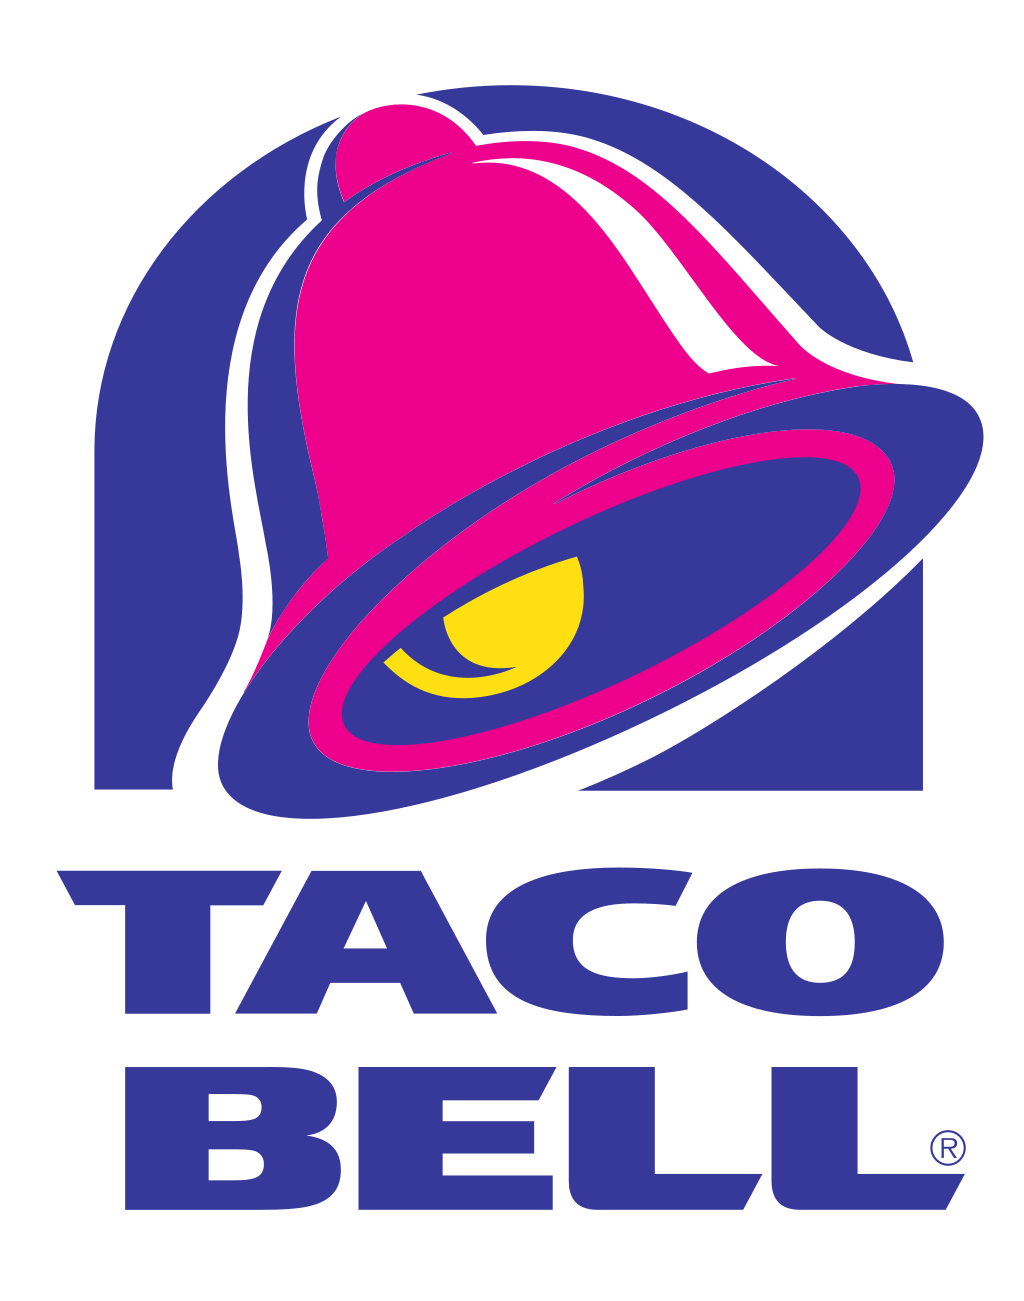 Taco Bell Canada